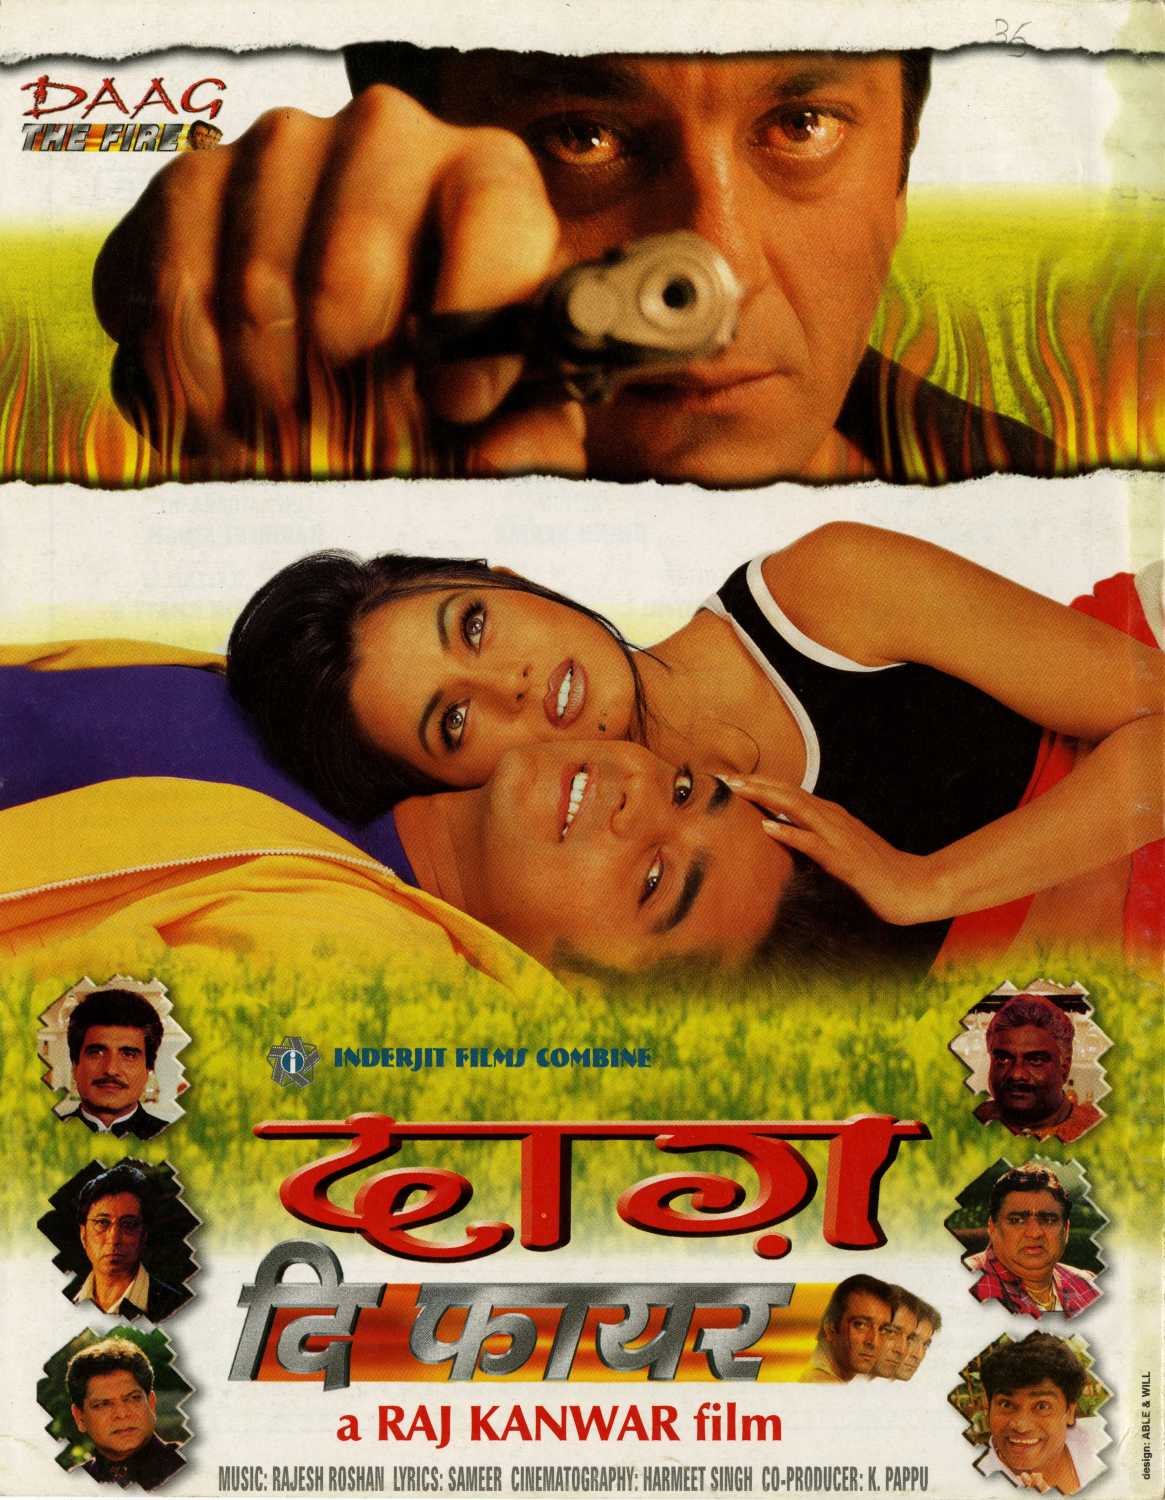 daag 1973 full movie in hindi hd download